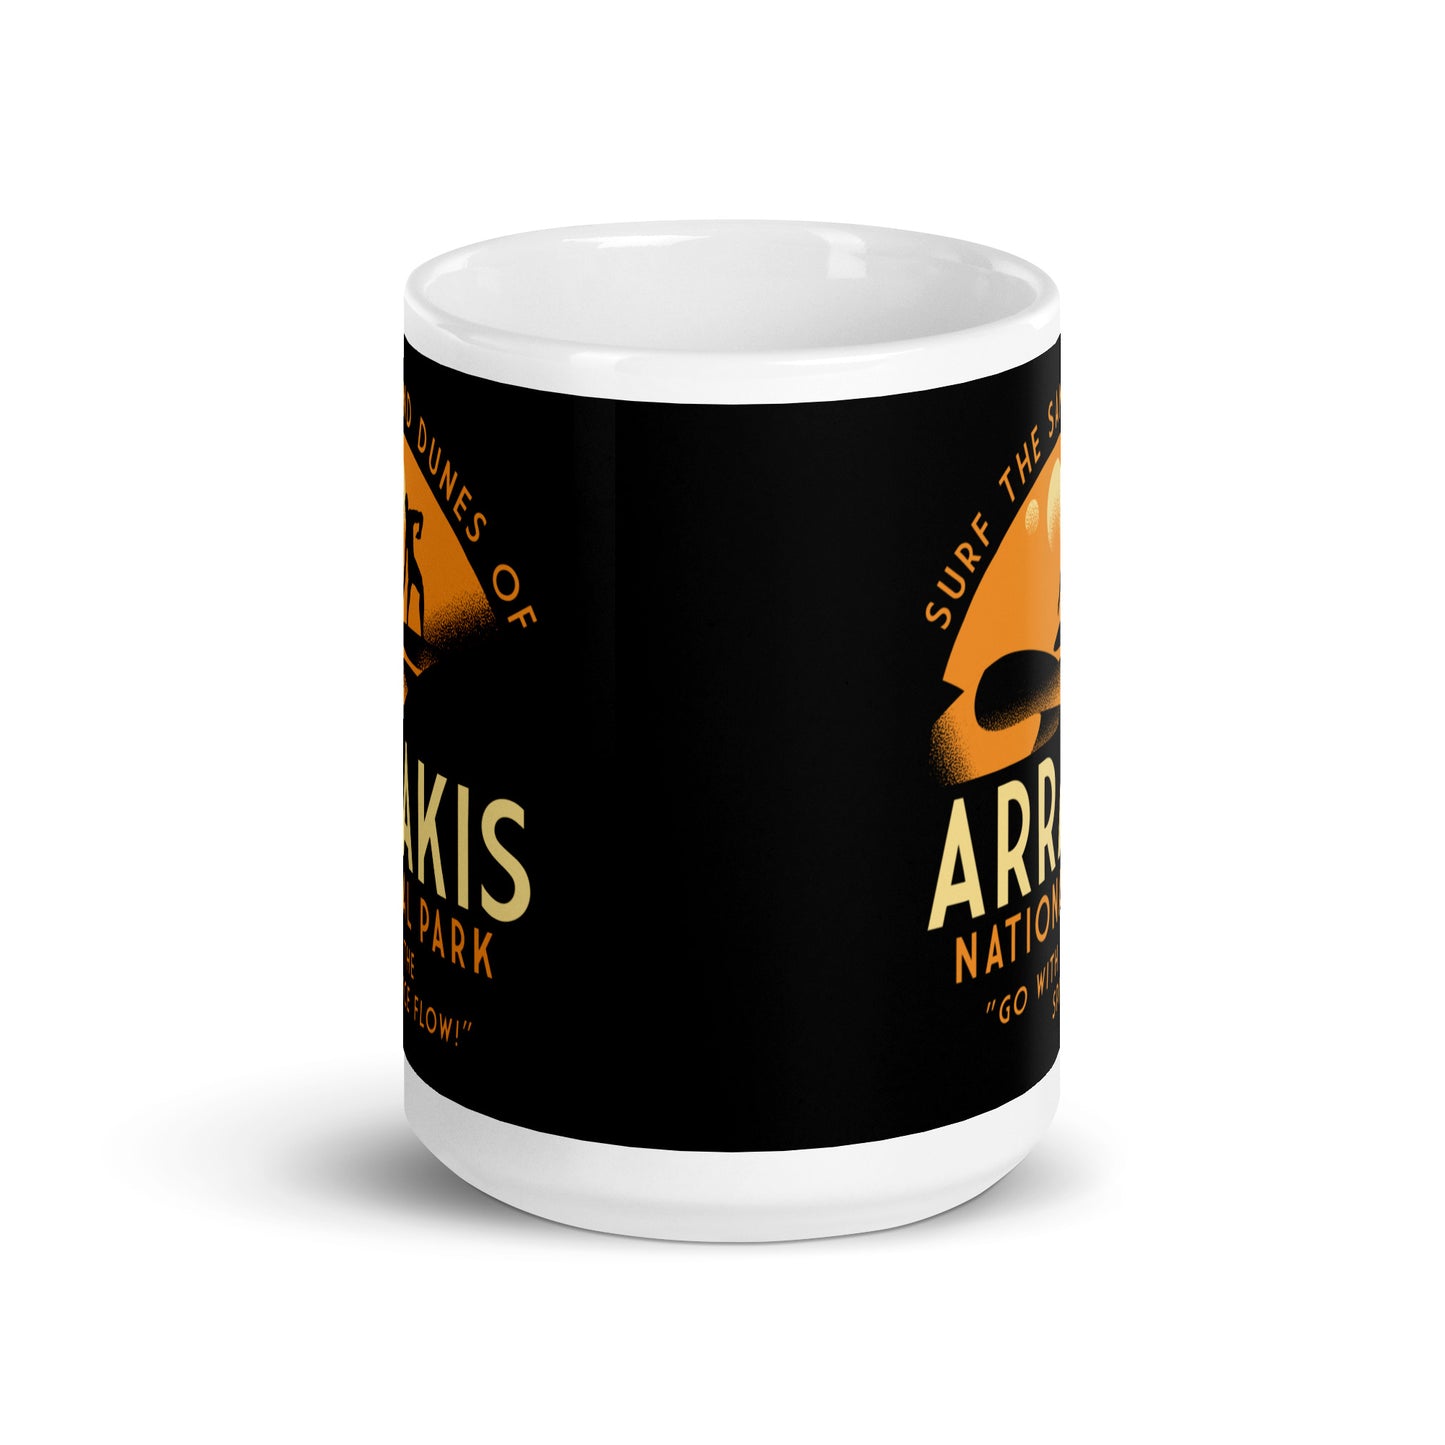 Arrakis National Park Mug